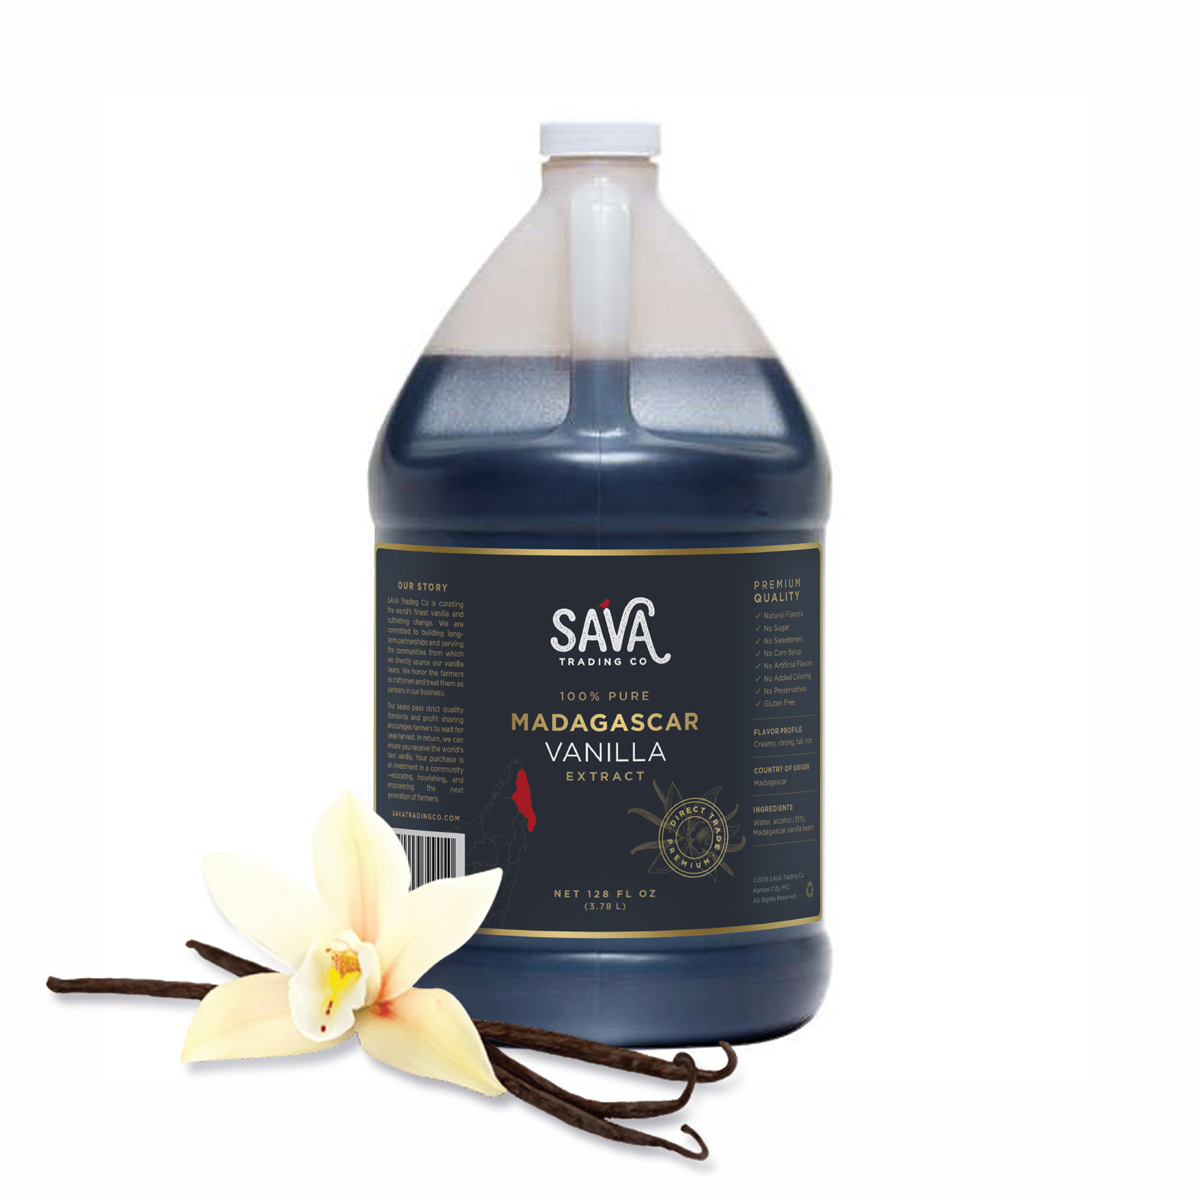 SAVA Trading Co Madagascar Vanilla Extract gallon 128 fl oz